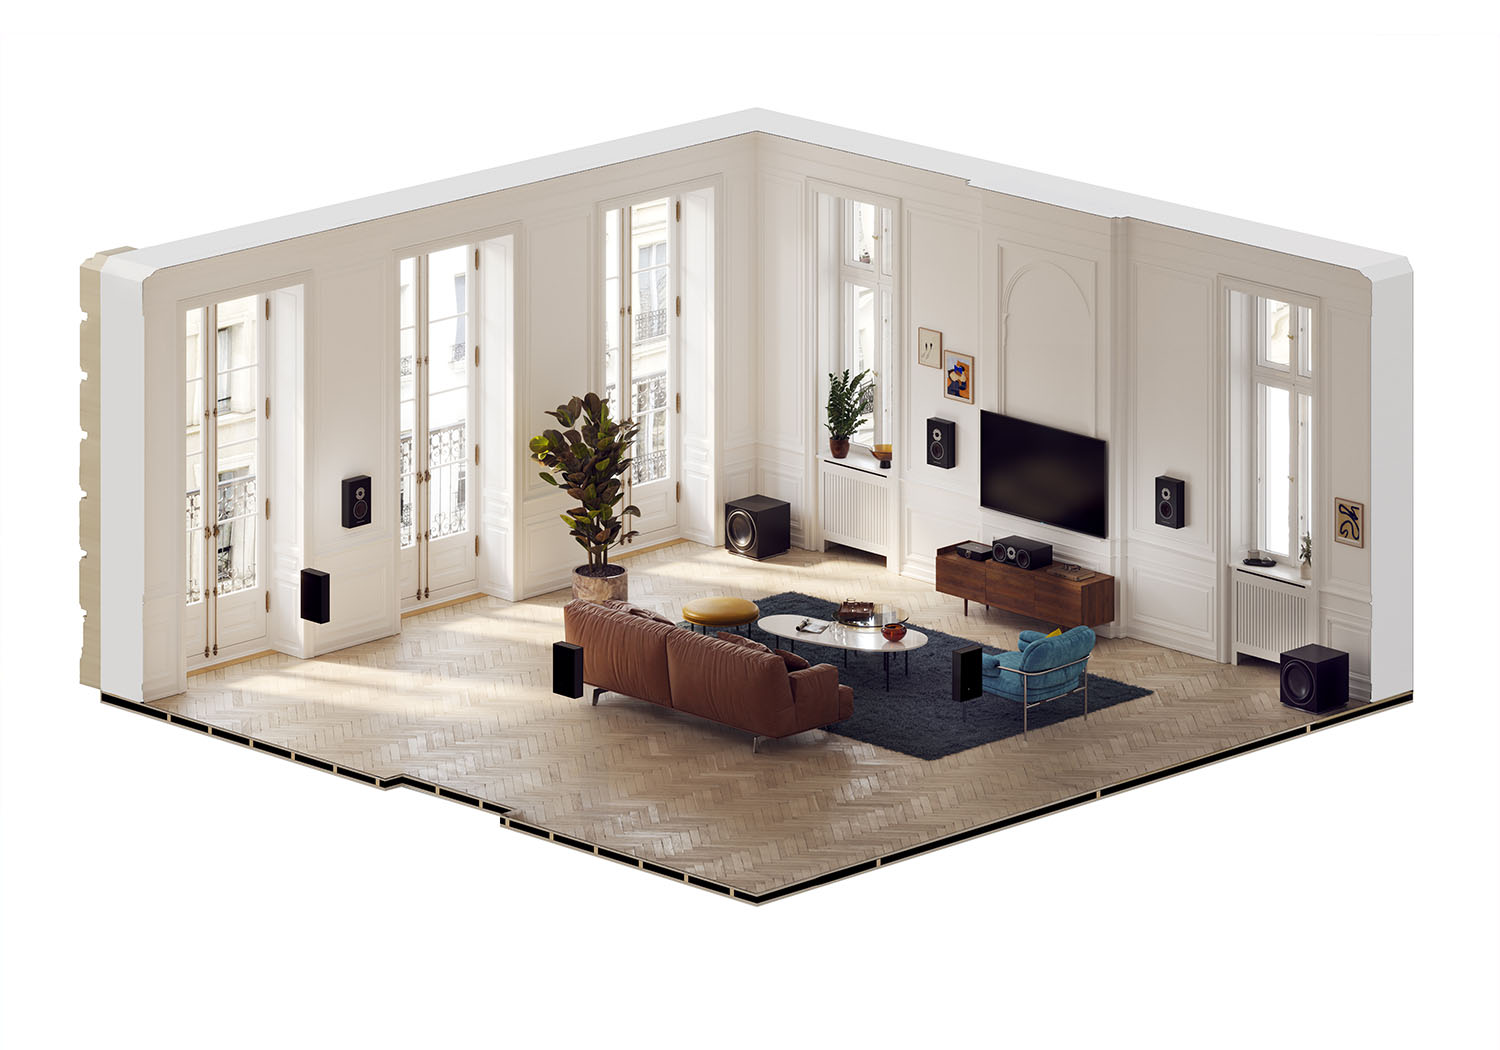 Isometric view of large floor plan